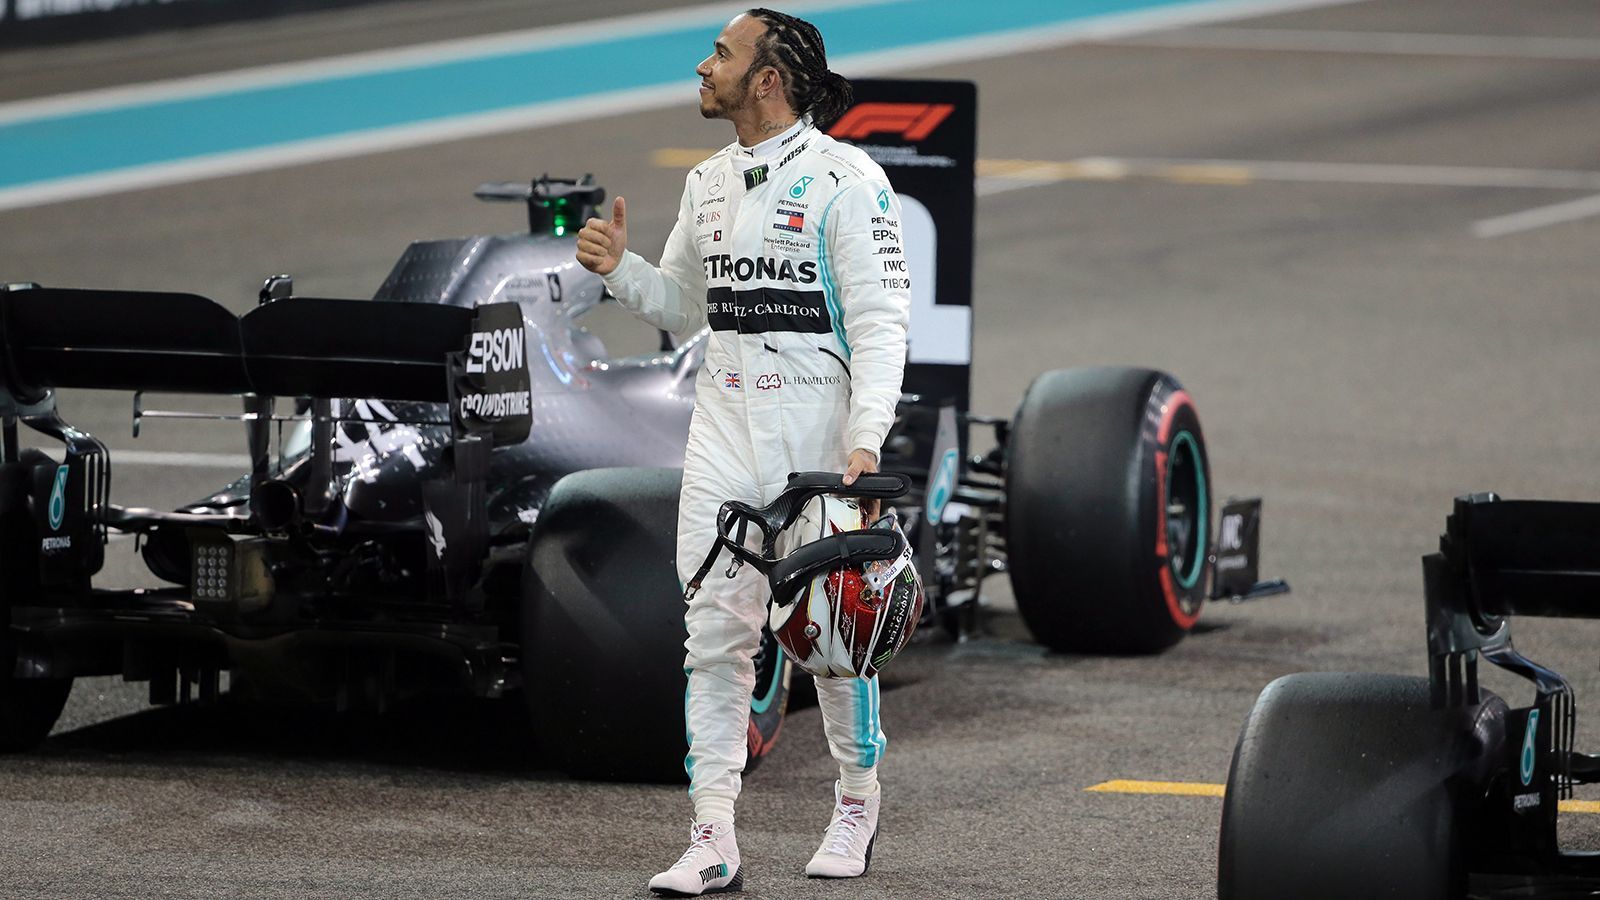 
                <strong>Pole Positions</strong><br>
                Lewis Hamilton: 97 (Platz 1) - Michael Schumacher: 68 (Platz 2)
              